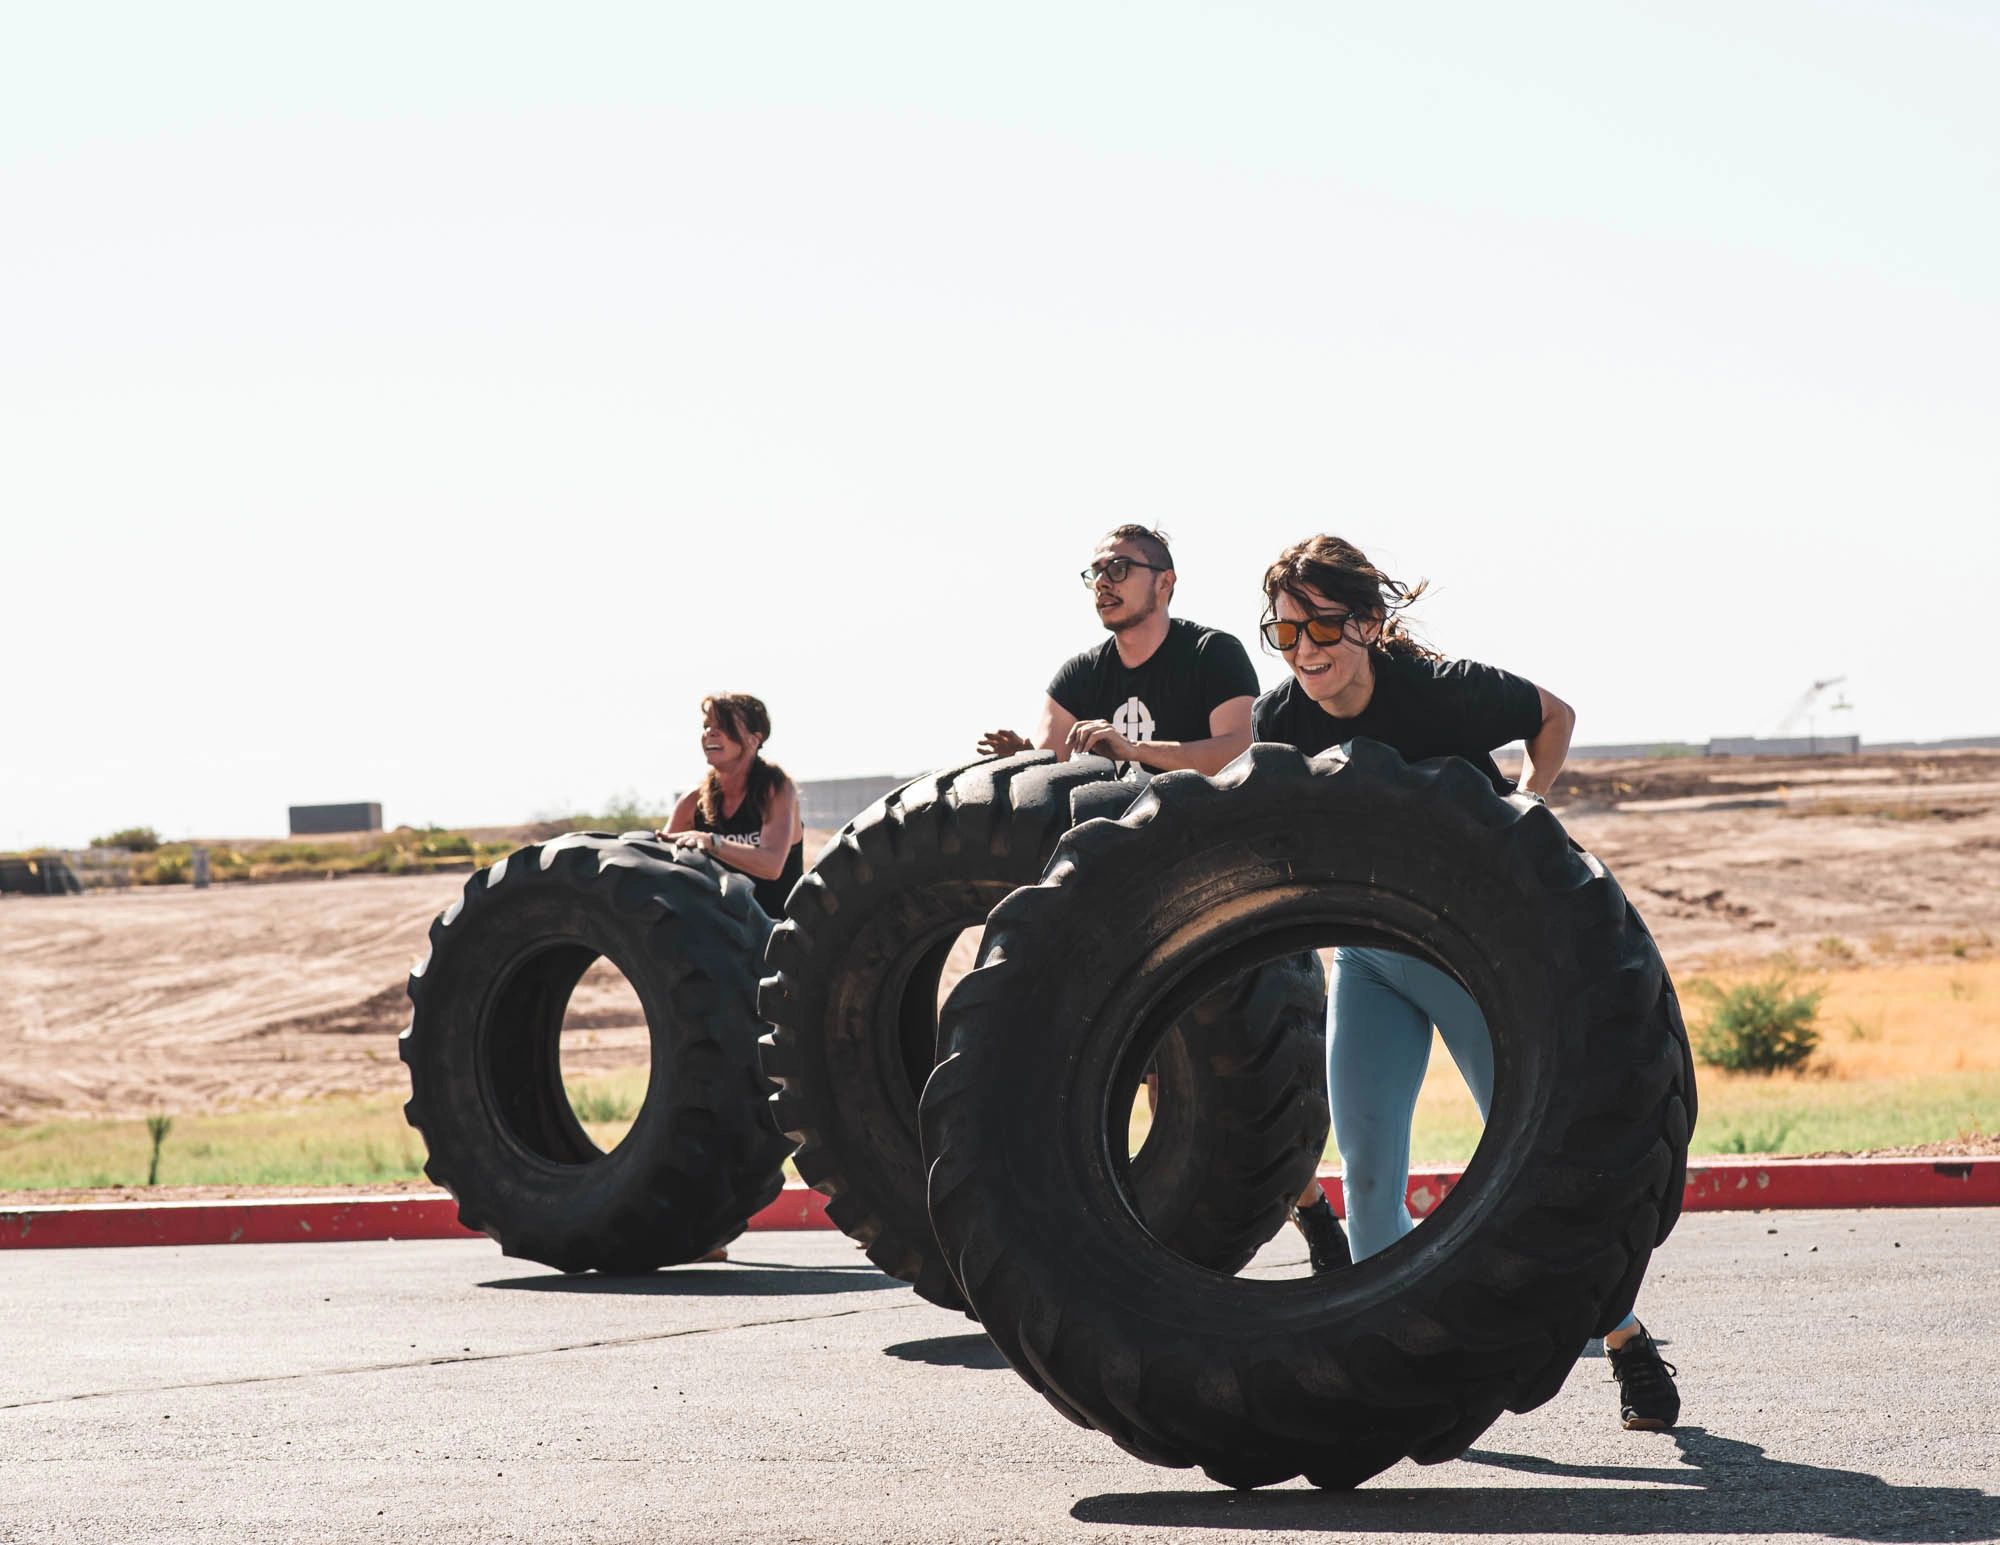 A CrossFit class at CrossFit SanTan in Mesa, AZ. Members are performing functional fitness movements